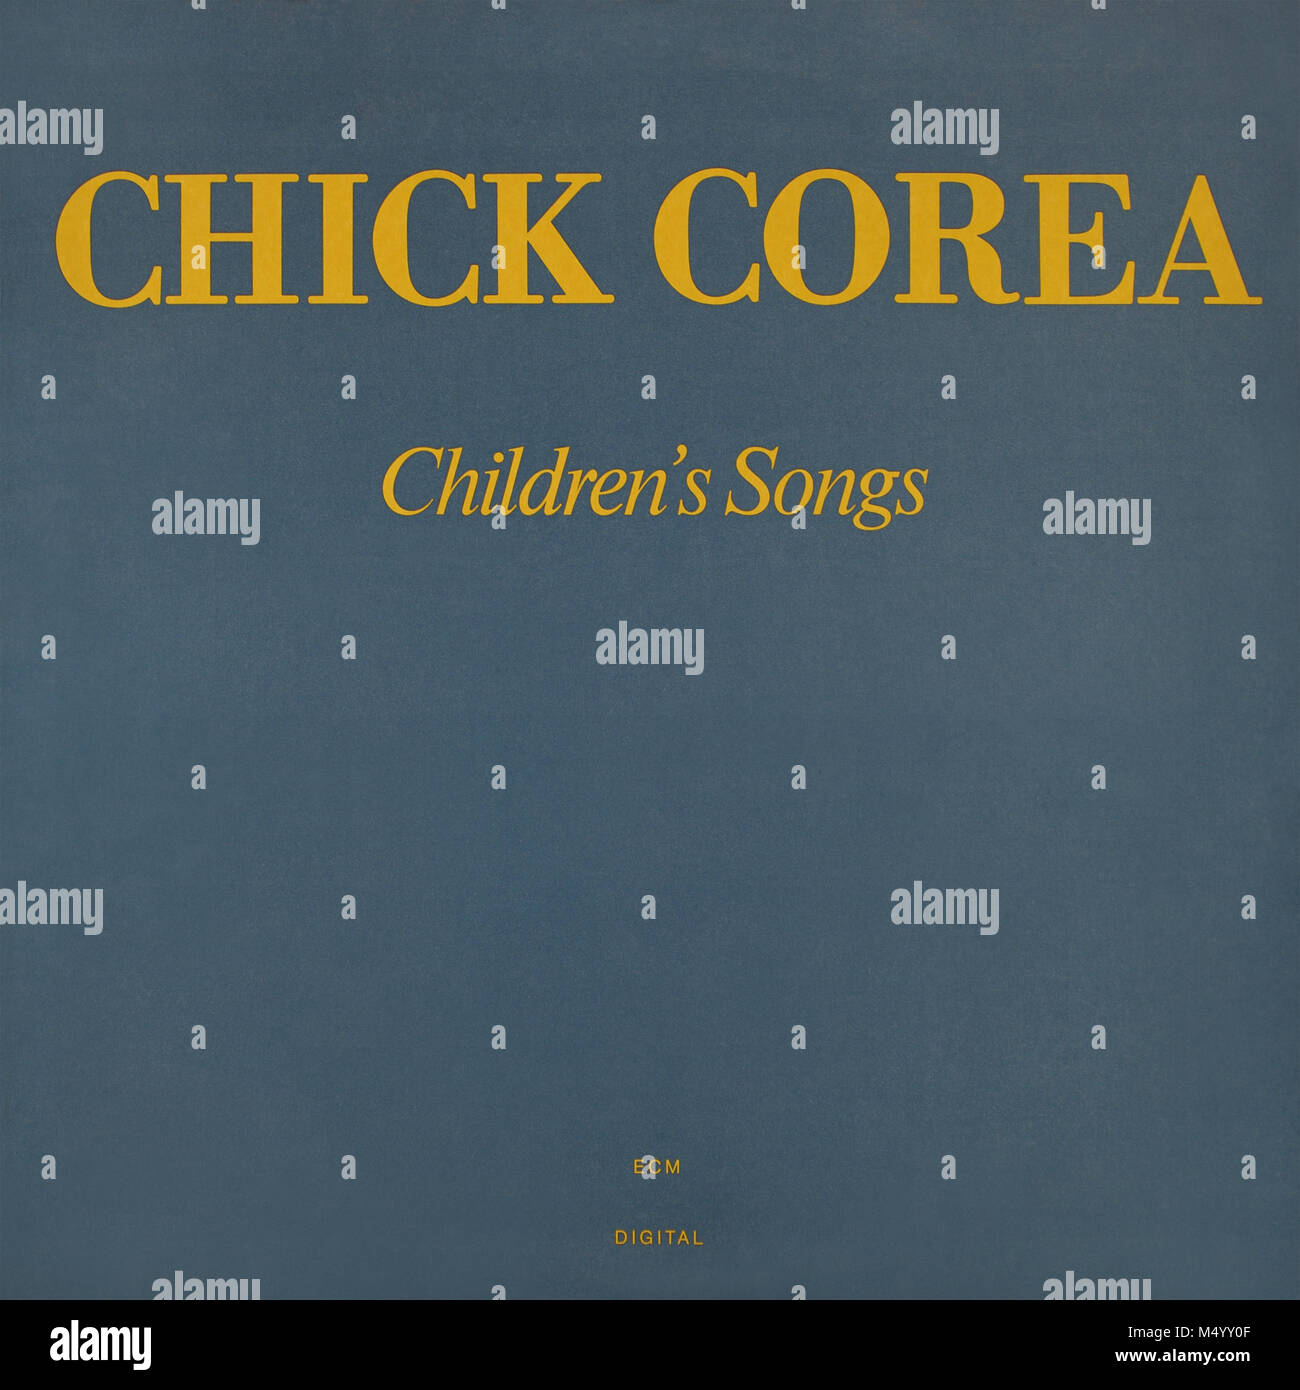 Chick Corea - original vinyl album cover - Children's Song - 1984 Stock Photo